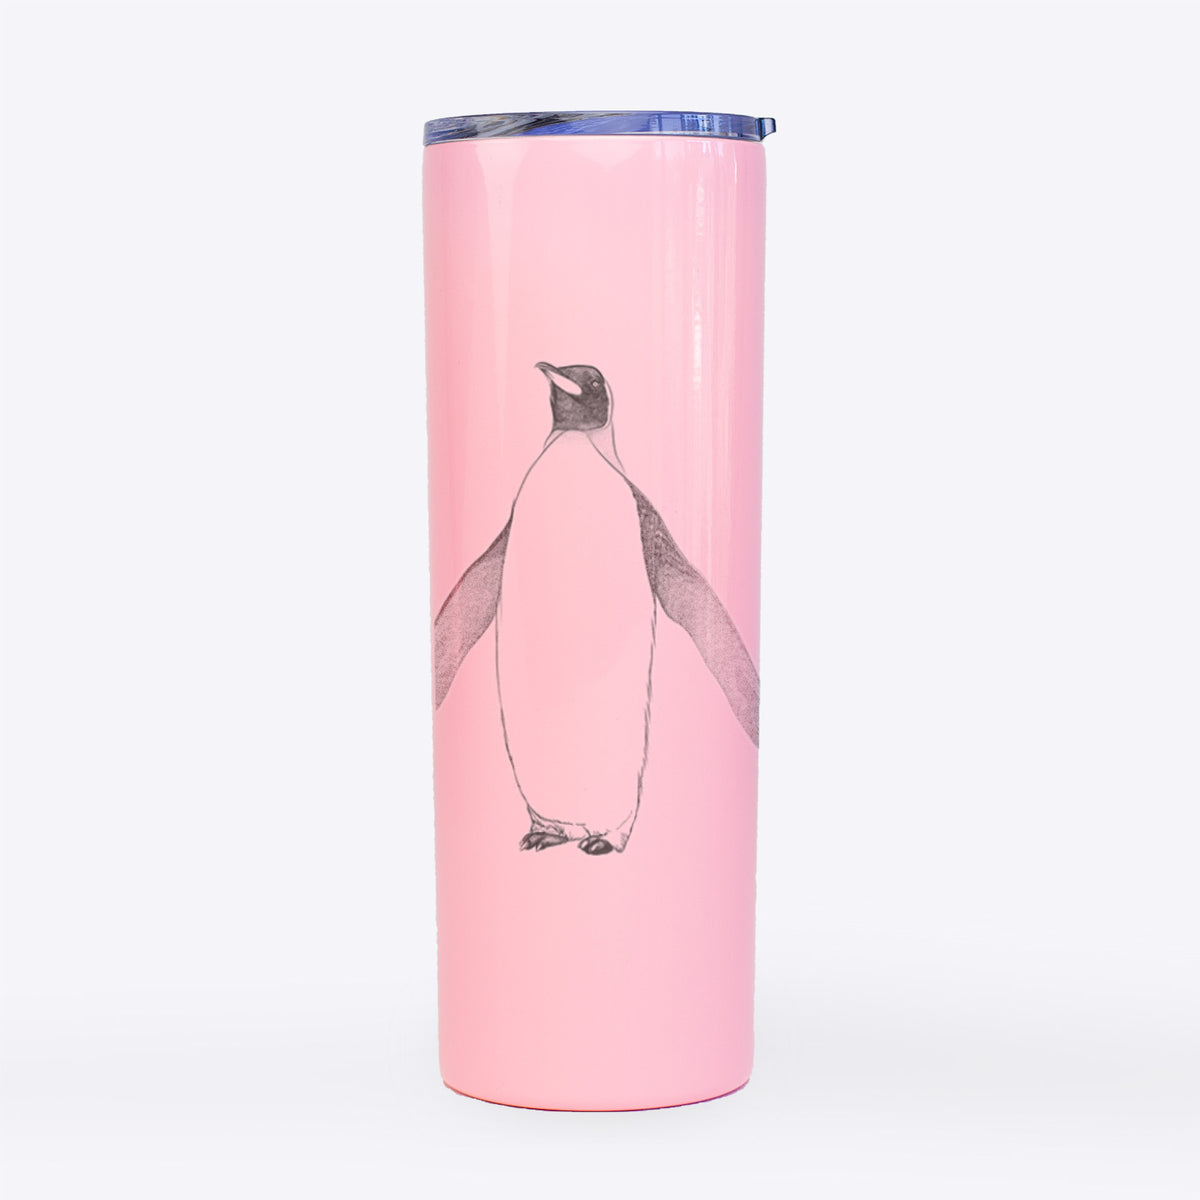 Emperor Penguin - Aptenodytes forsteri - 20oz Skinny Tumbler